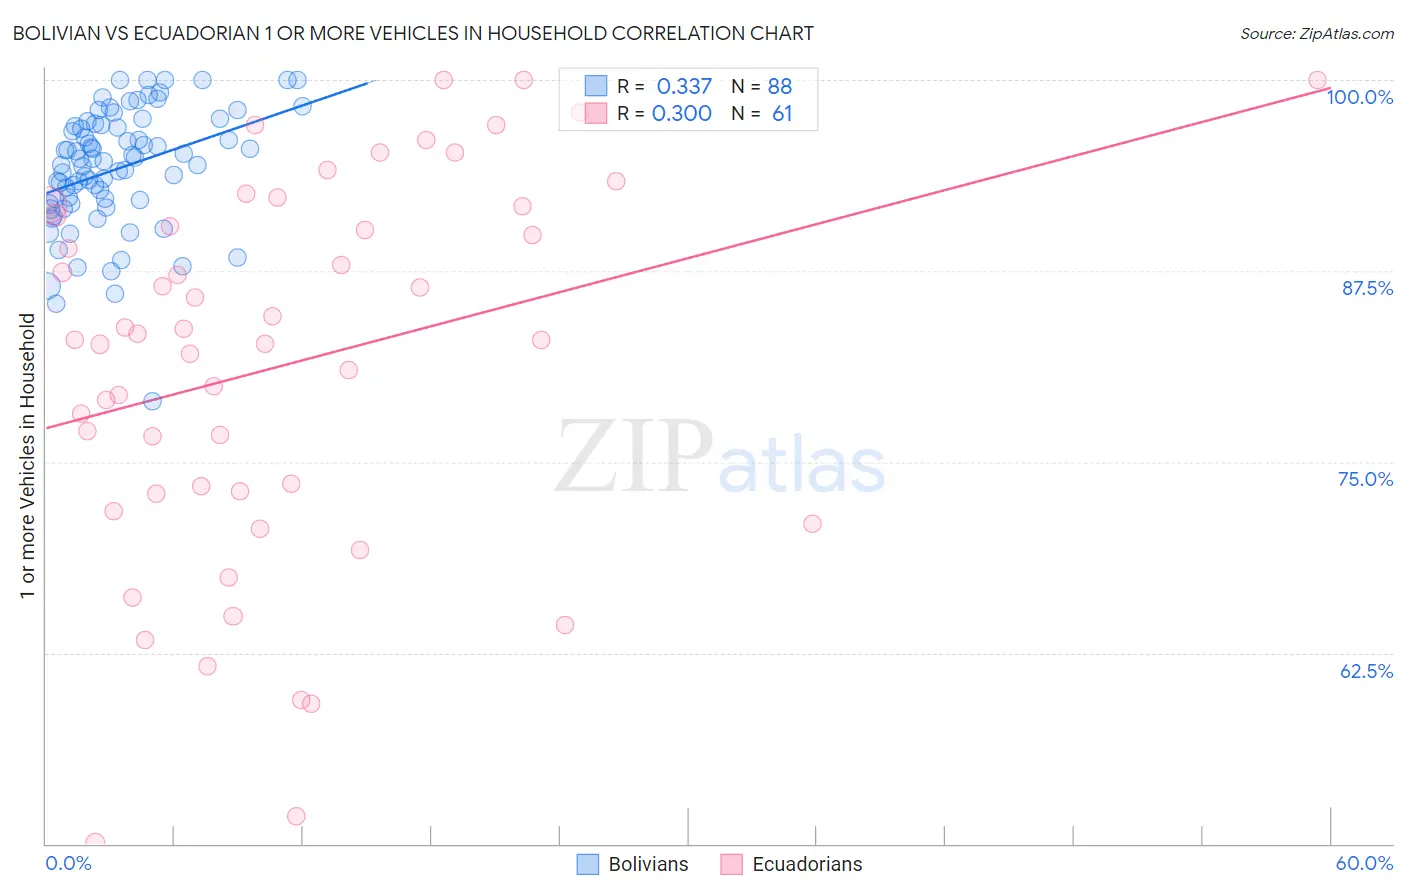 Bolivian vs Ecuadorian 1 or more Vehicles in Household